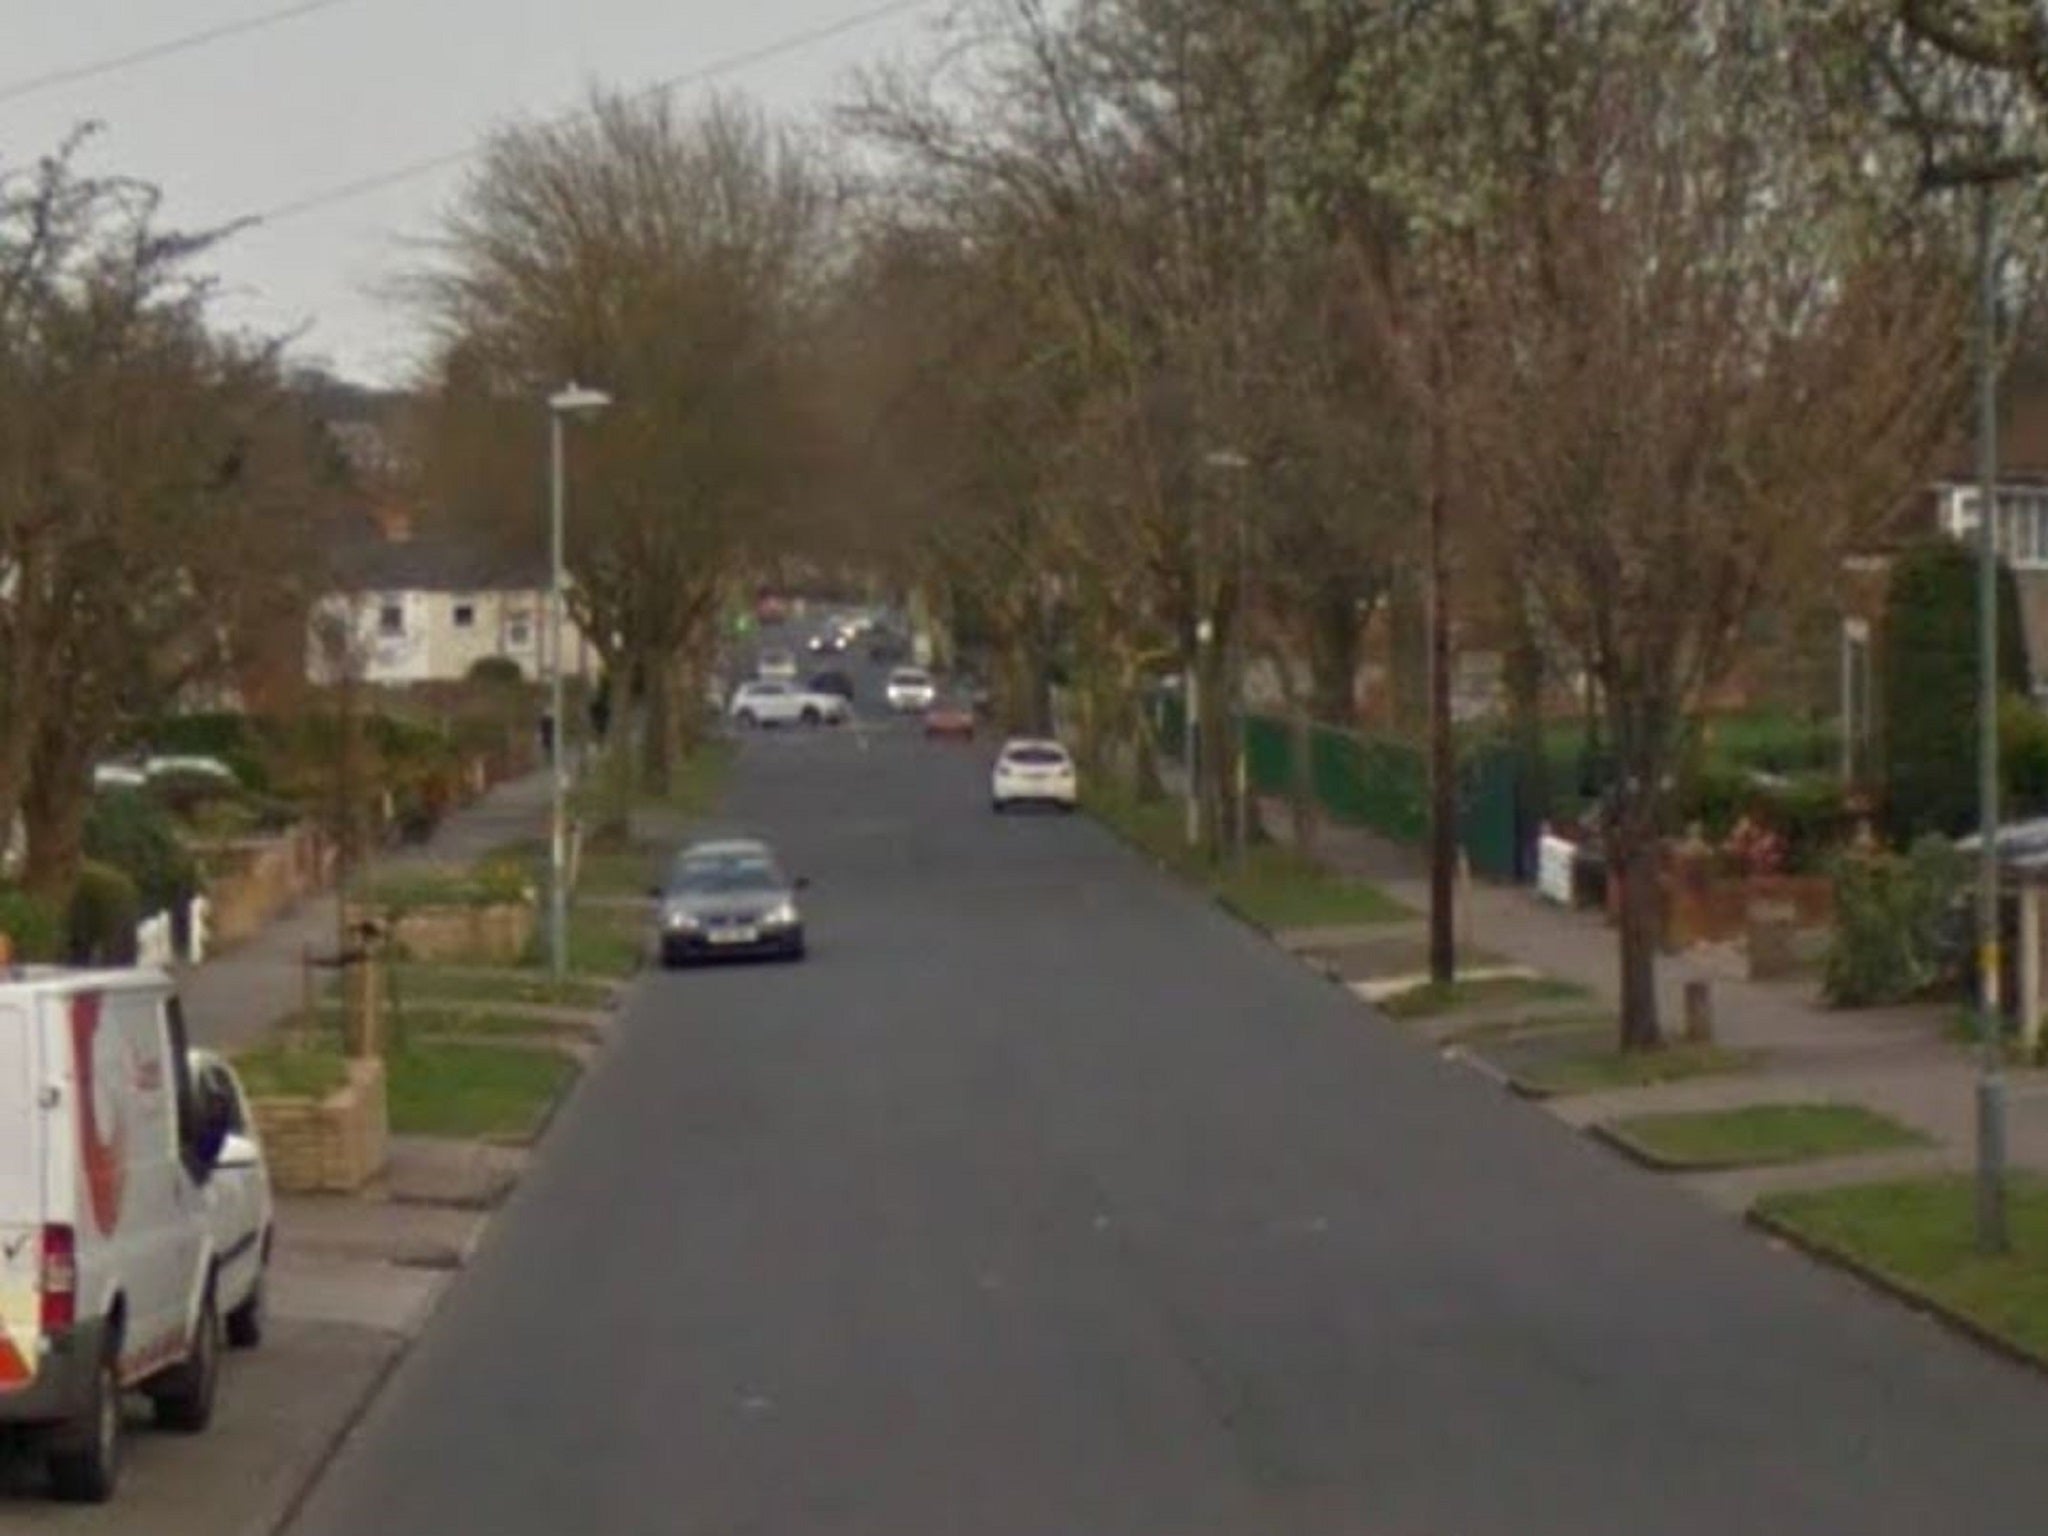 General image showing part of Goosemoor Lane in Erdington, Birmingham, where a 20-year-old man was shot dead on 8 August 2019.